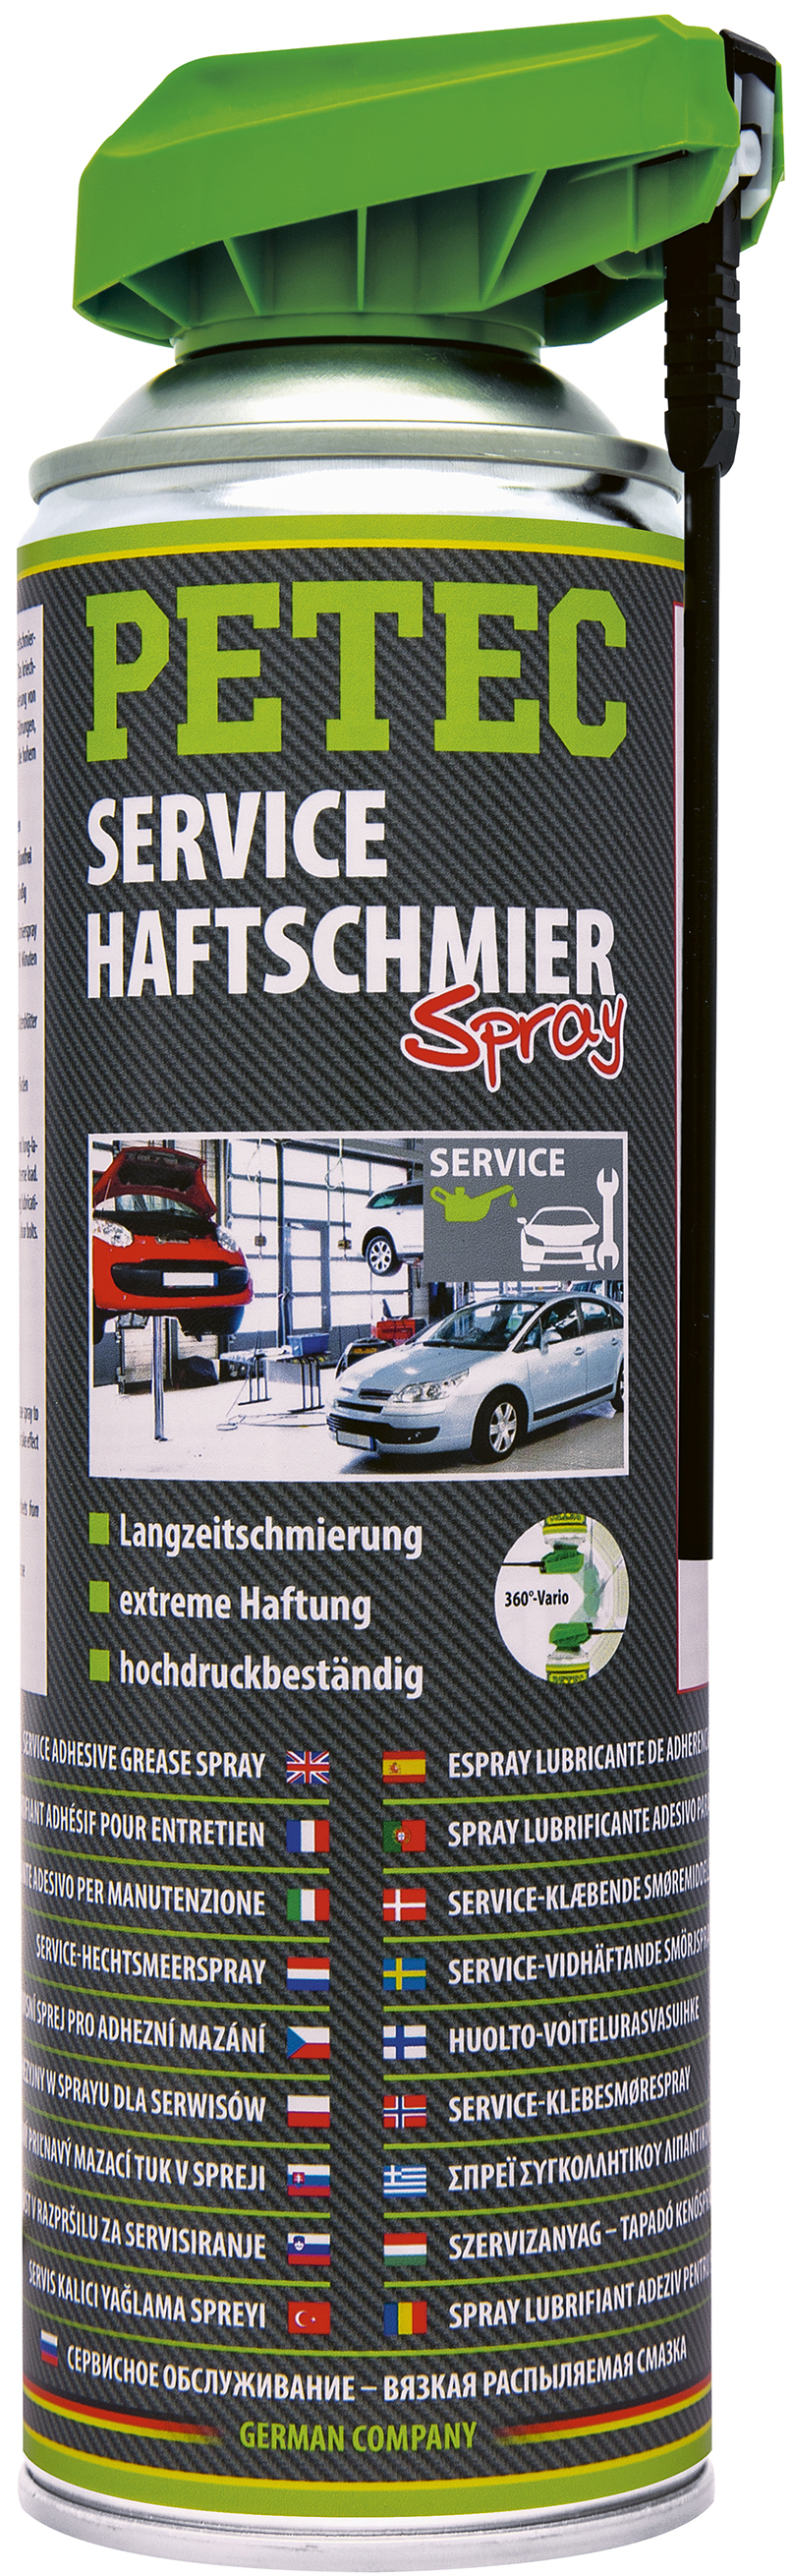 Service-Haftschmier-Spray, transparent, 500ml